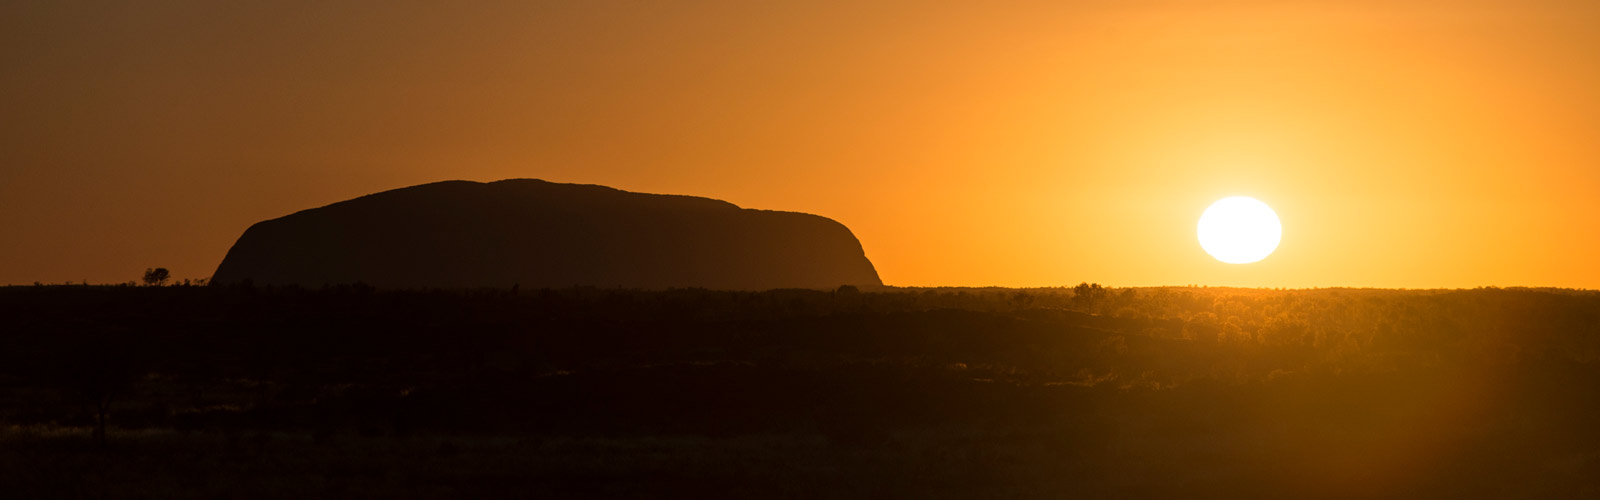 About Uluru, Australia